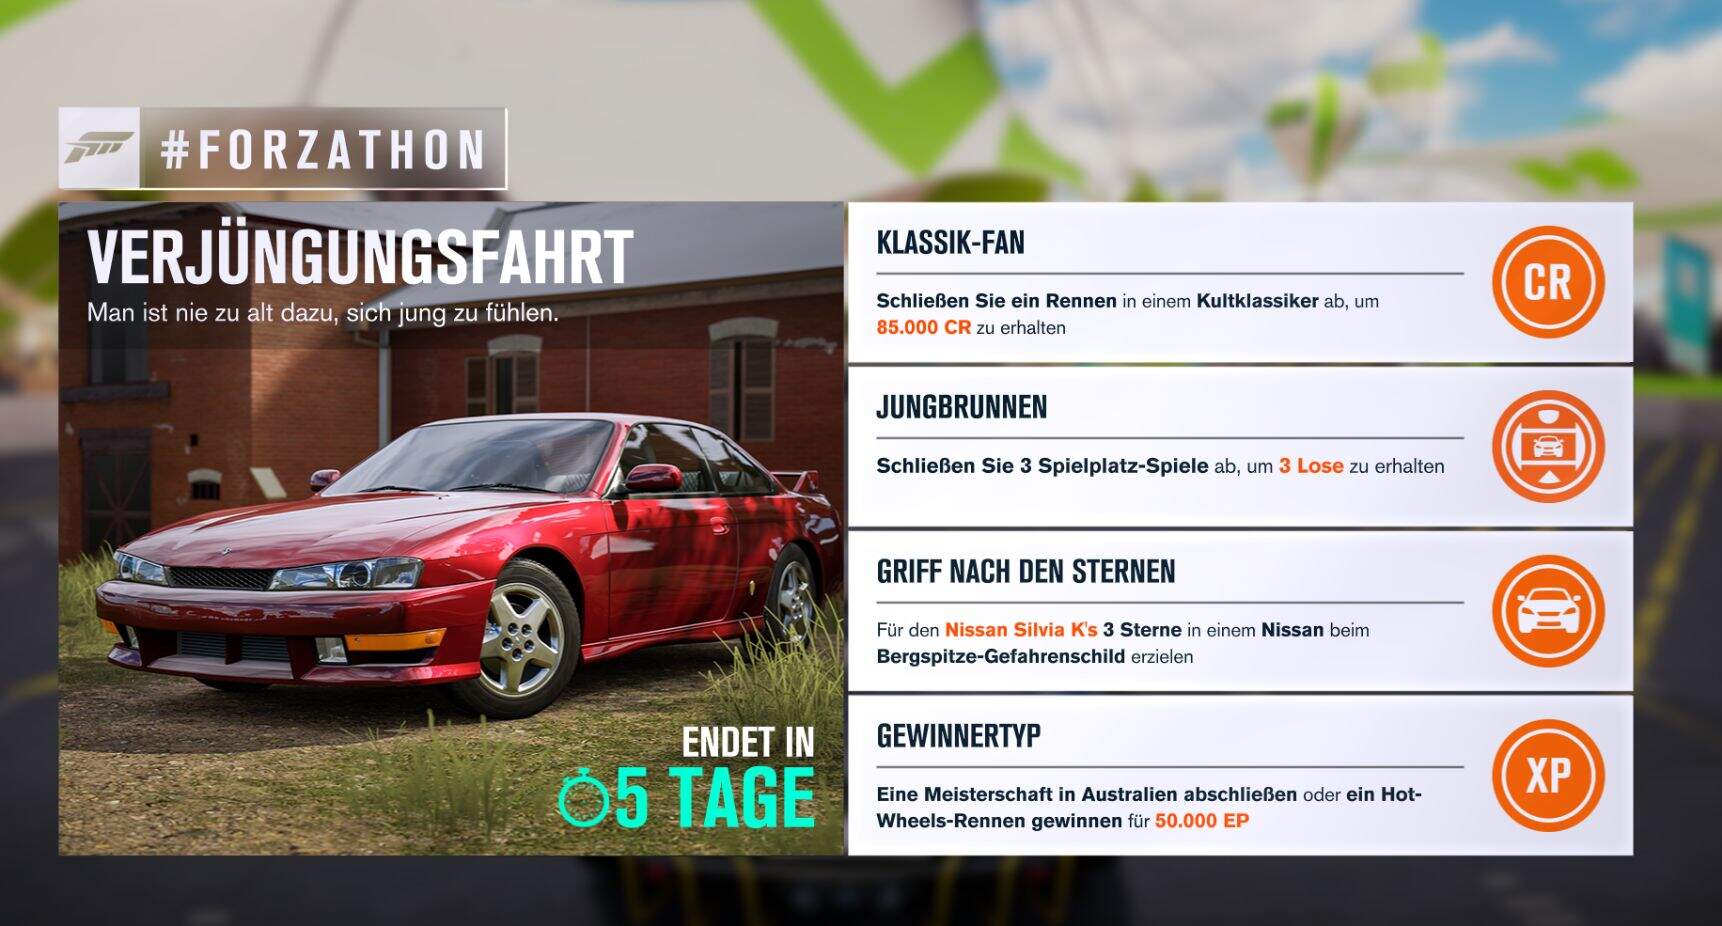 Forza Horizon 3 #Forzathon Guide KW 49 – Verjüngungsfahrt 